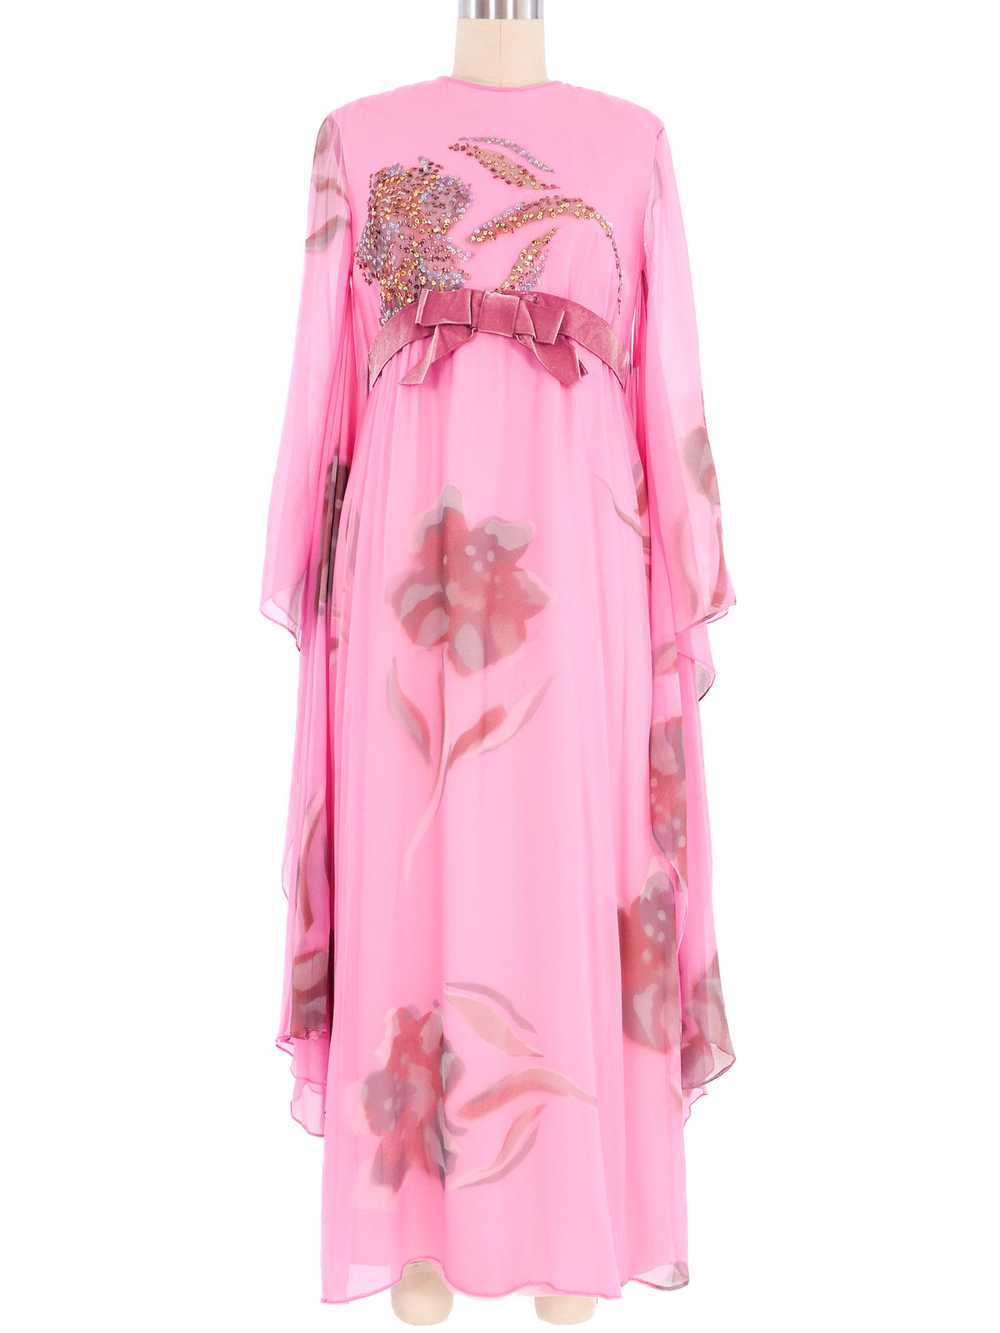 Emma Domb Hand Painted Kimono Sleeve Dress - image 4